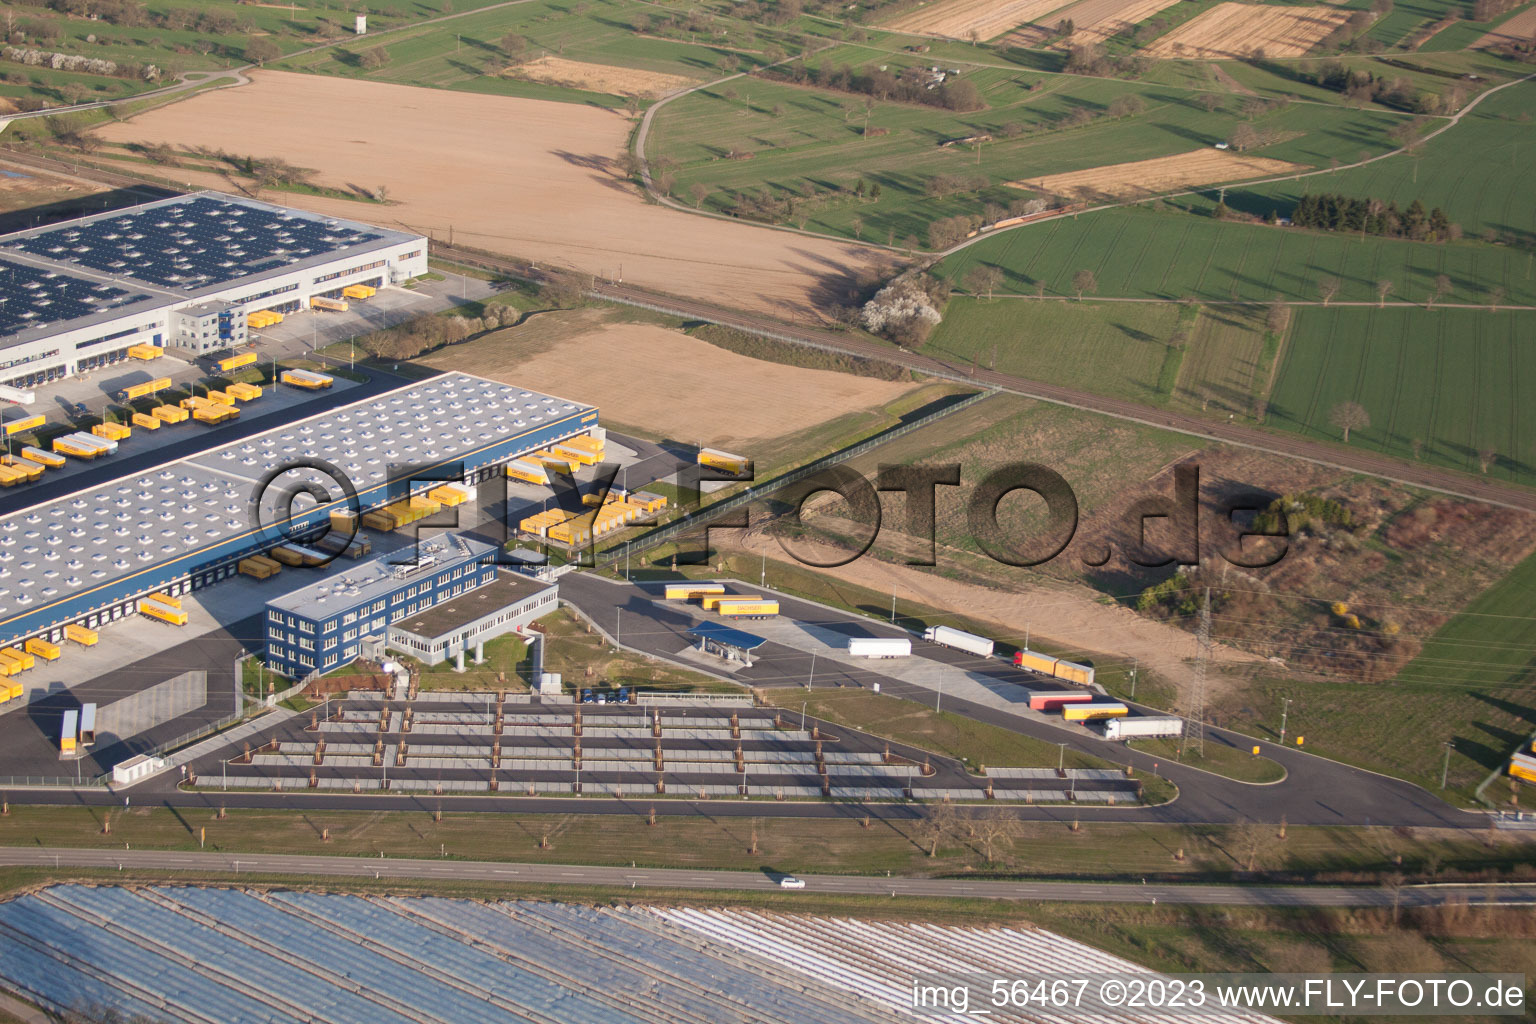 Centre logistique DACHSER Karlsruhe GmbH, Malsch à Malsch dans le département Bade-Wurtemberg, Allemagne vue d'en haut